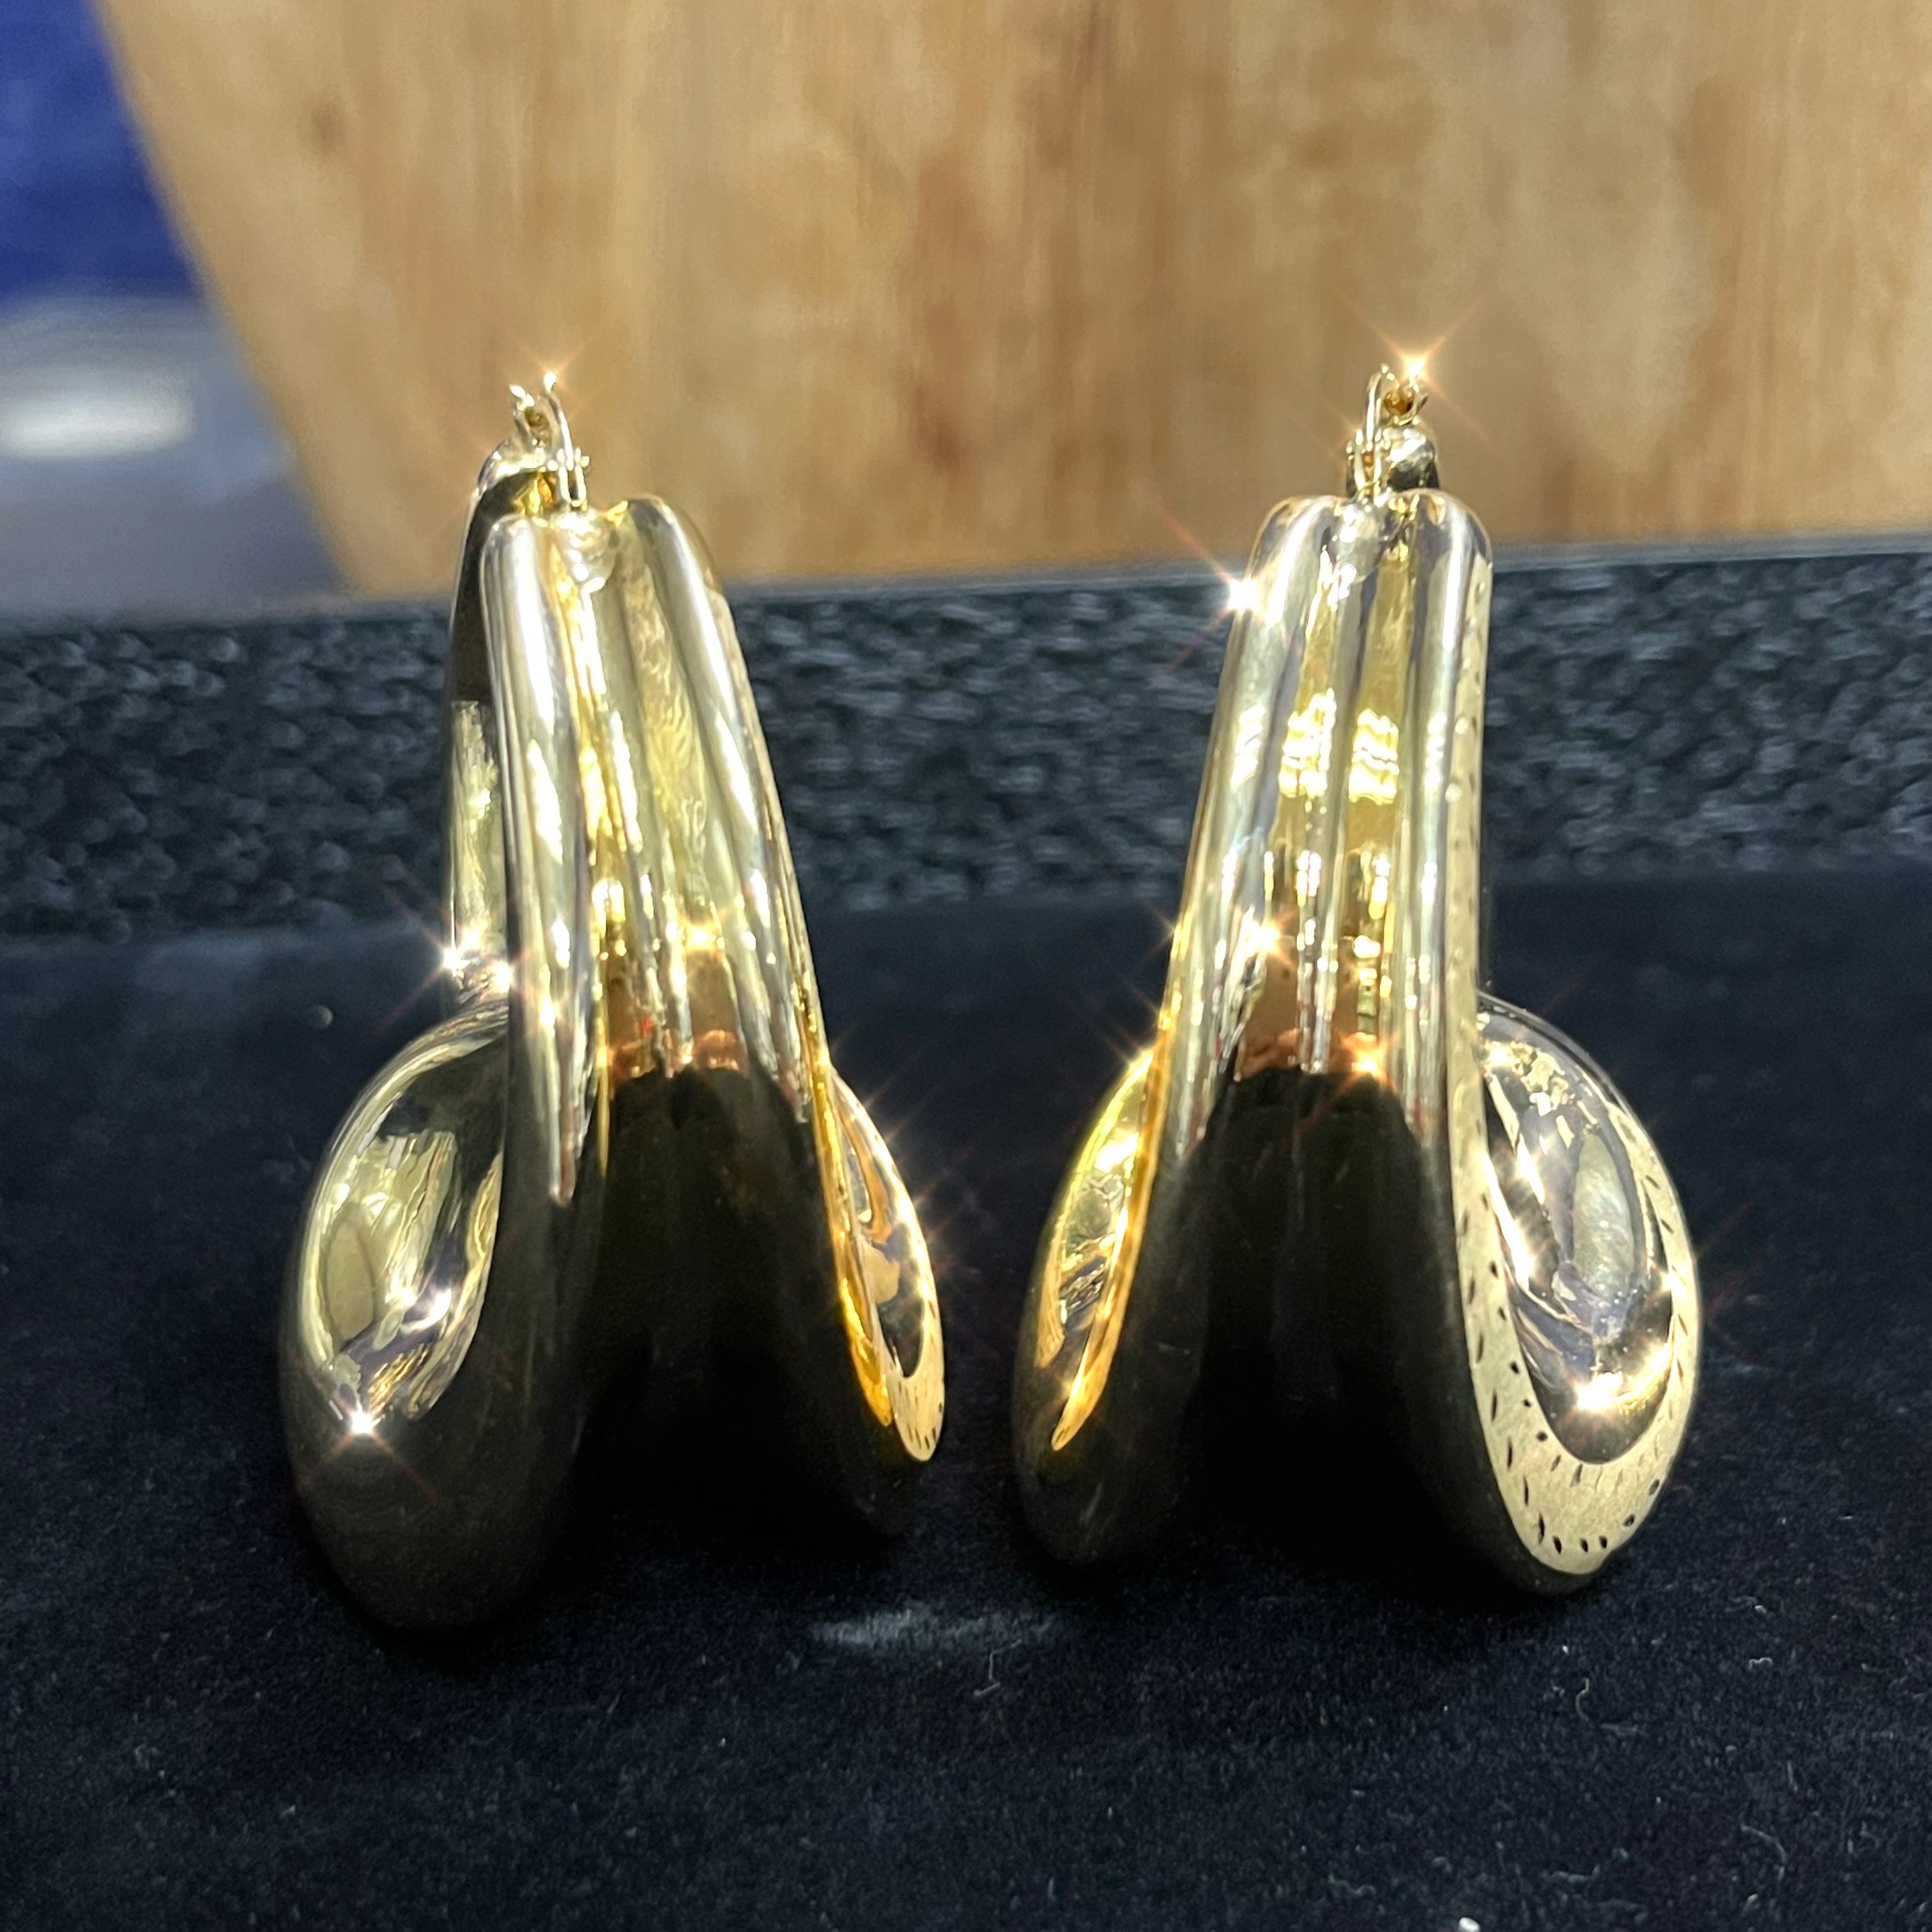 Amazing Figural 14K Yellow Gold Puffy Sleek Hoop Earrings